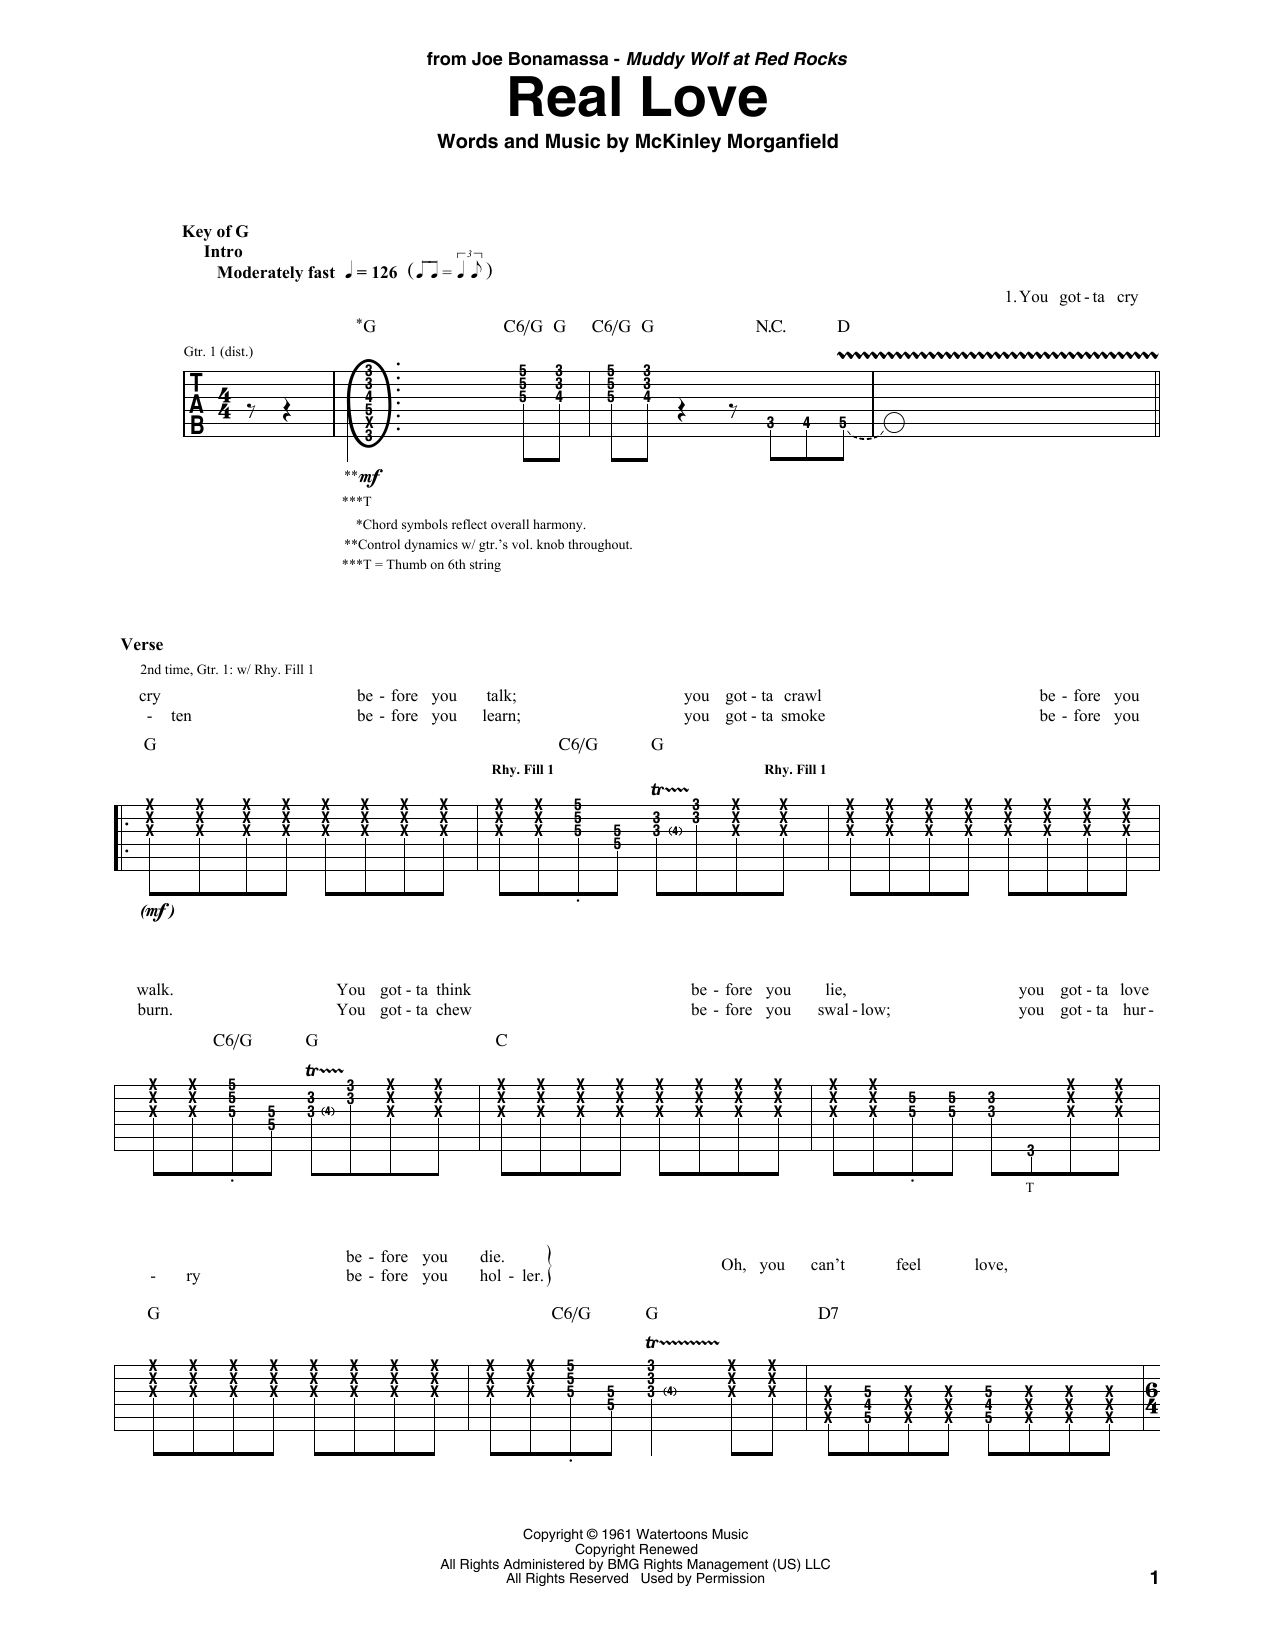 Joe Bonamassa Real Love Sheet Music Notes & Chords for Guitar Tab - Download or Print PDF